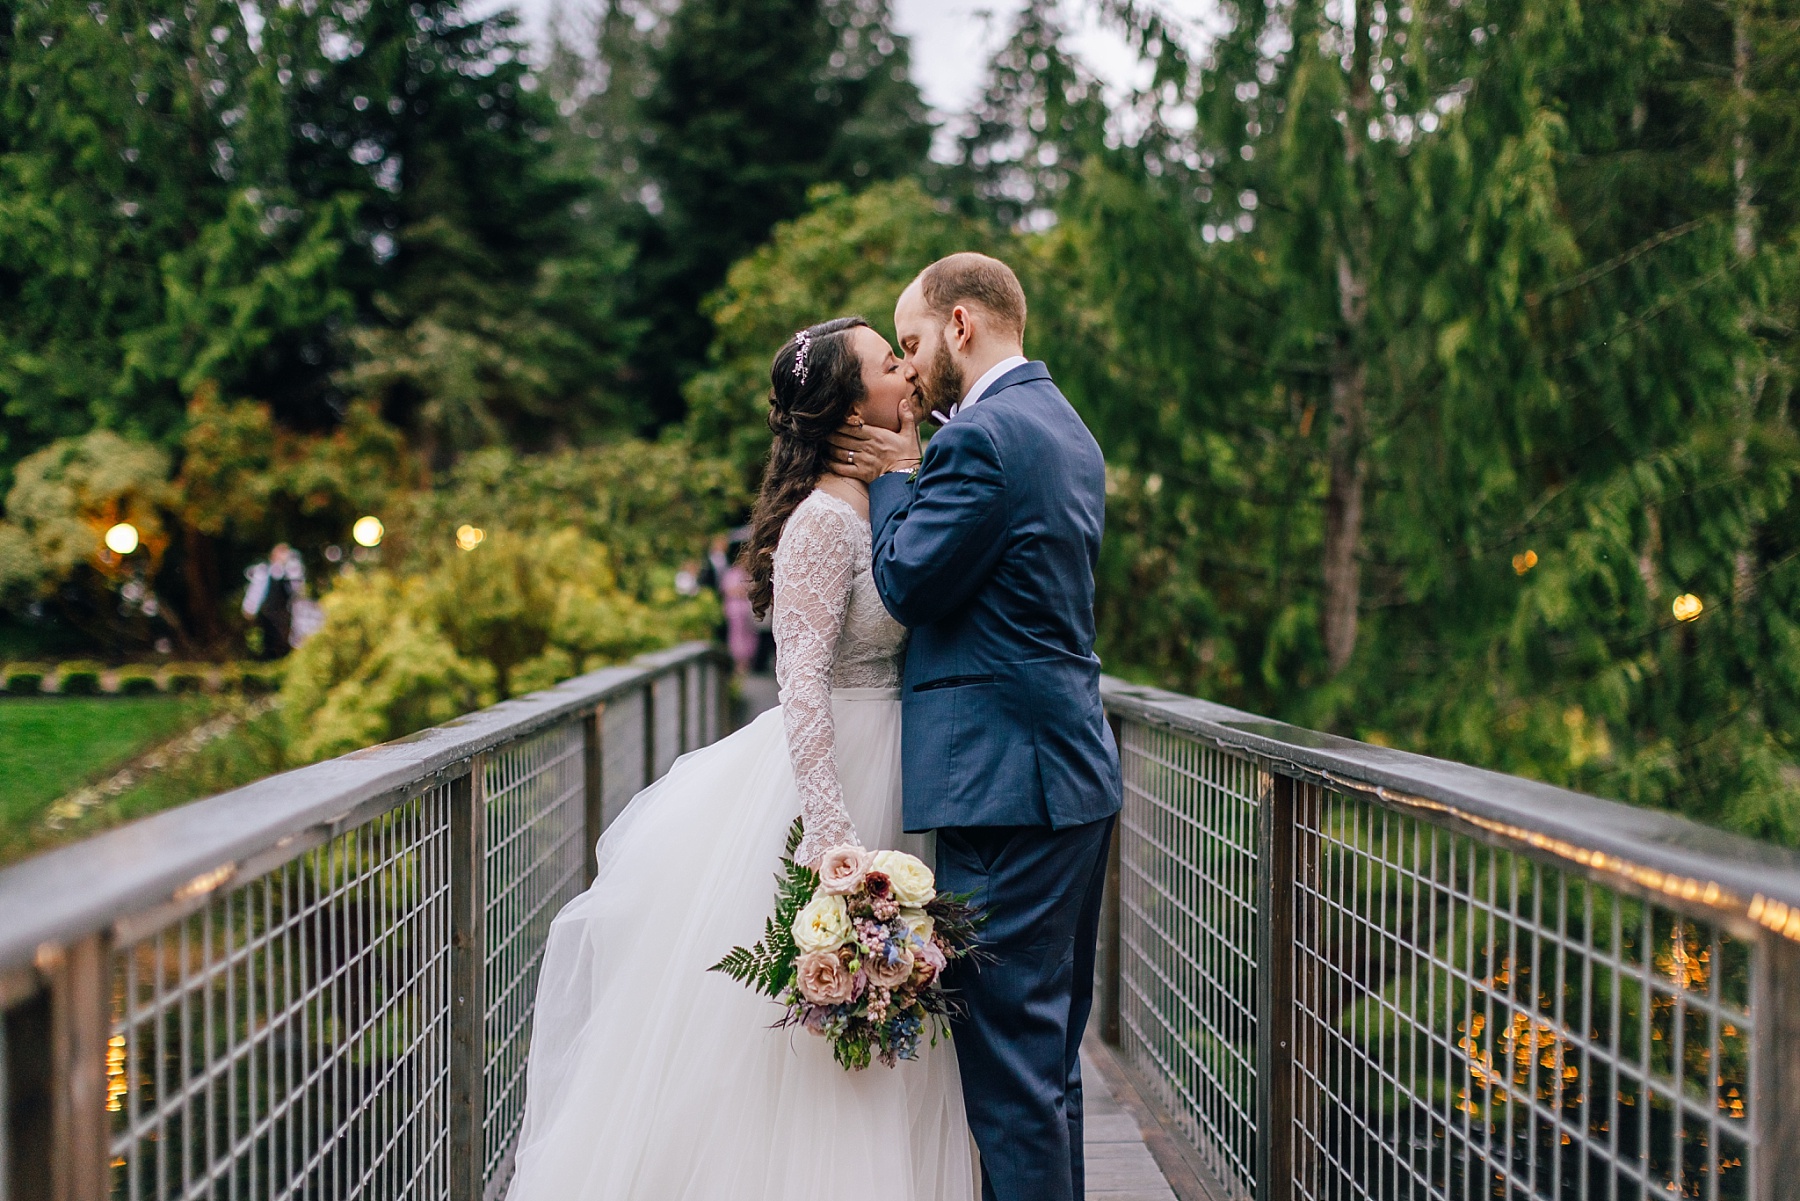 Gray Bridge Venue Wedding Photos by Joanna Monger - Best Wedding Photographers in the PNW